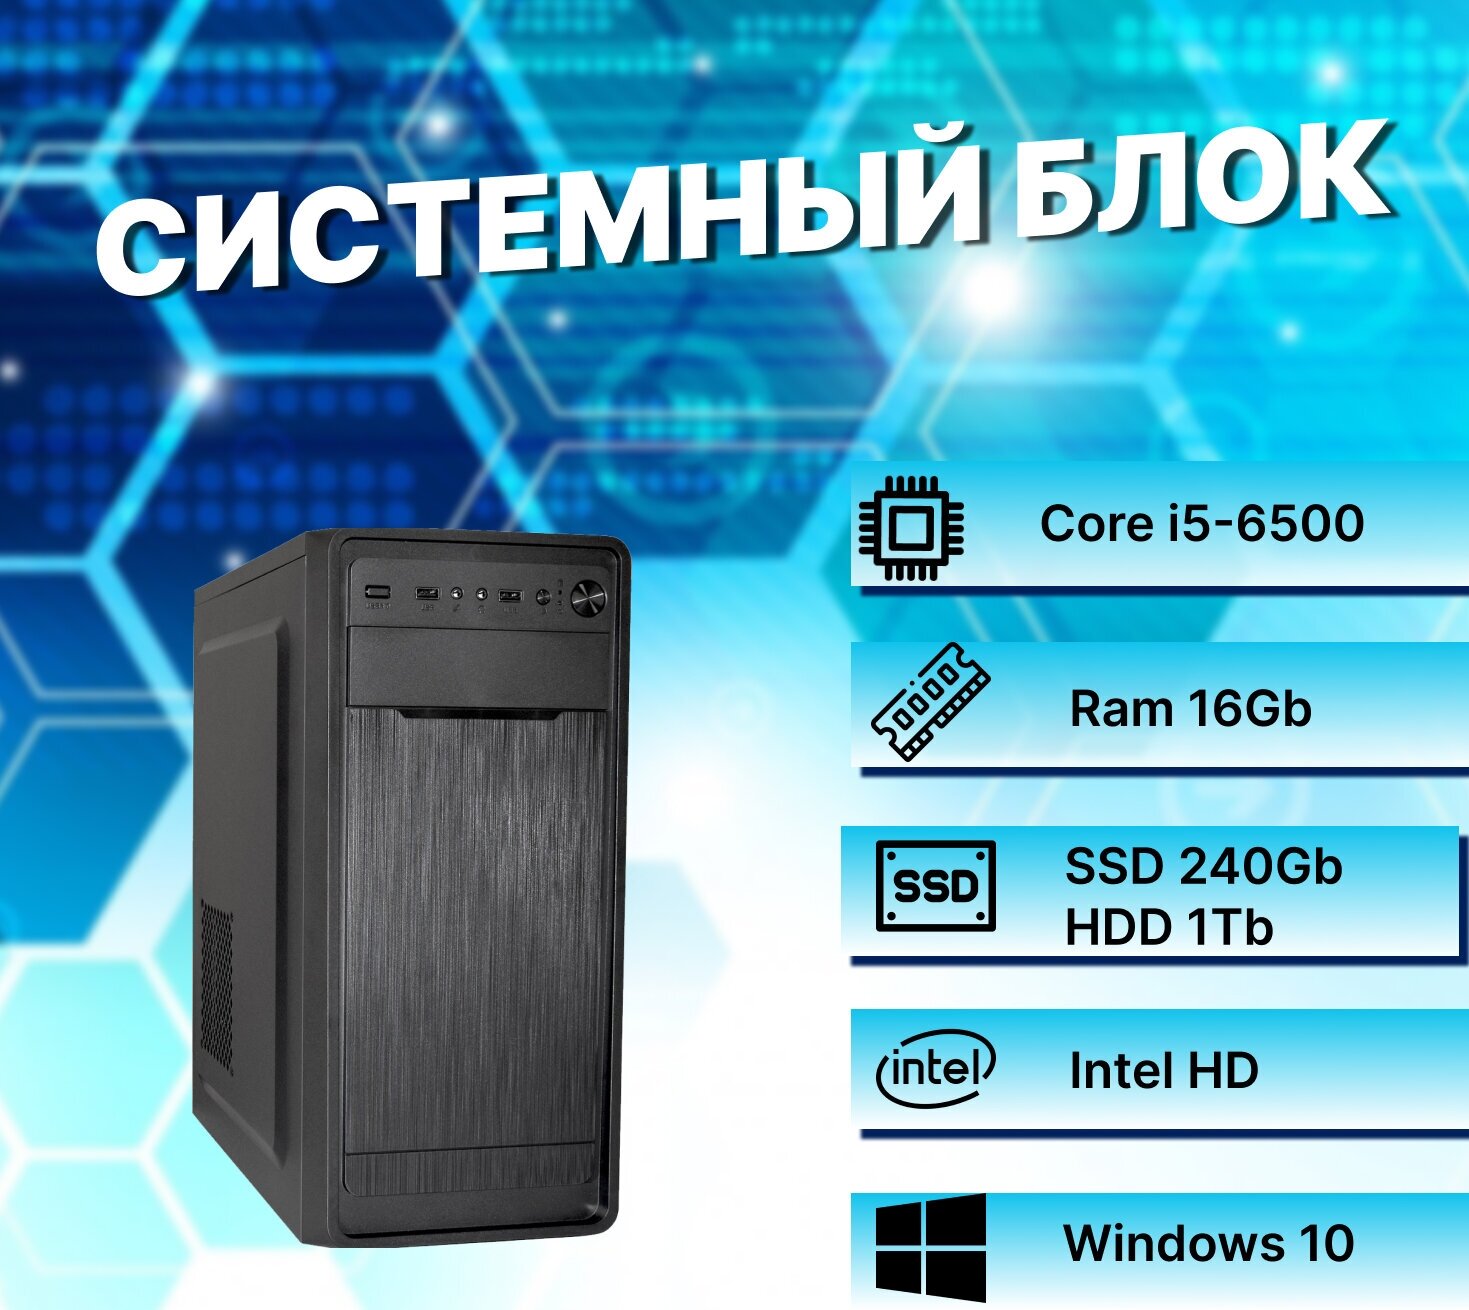 Системный блок Intel Core I5-6500 (3.2ГГц)/ RAM 16Gb/ SSD 240Gb/ HDD 1Tb/ Intel HD/ Windows 10 Pro